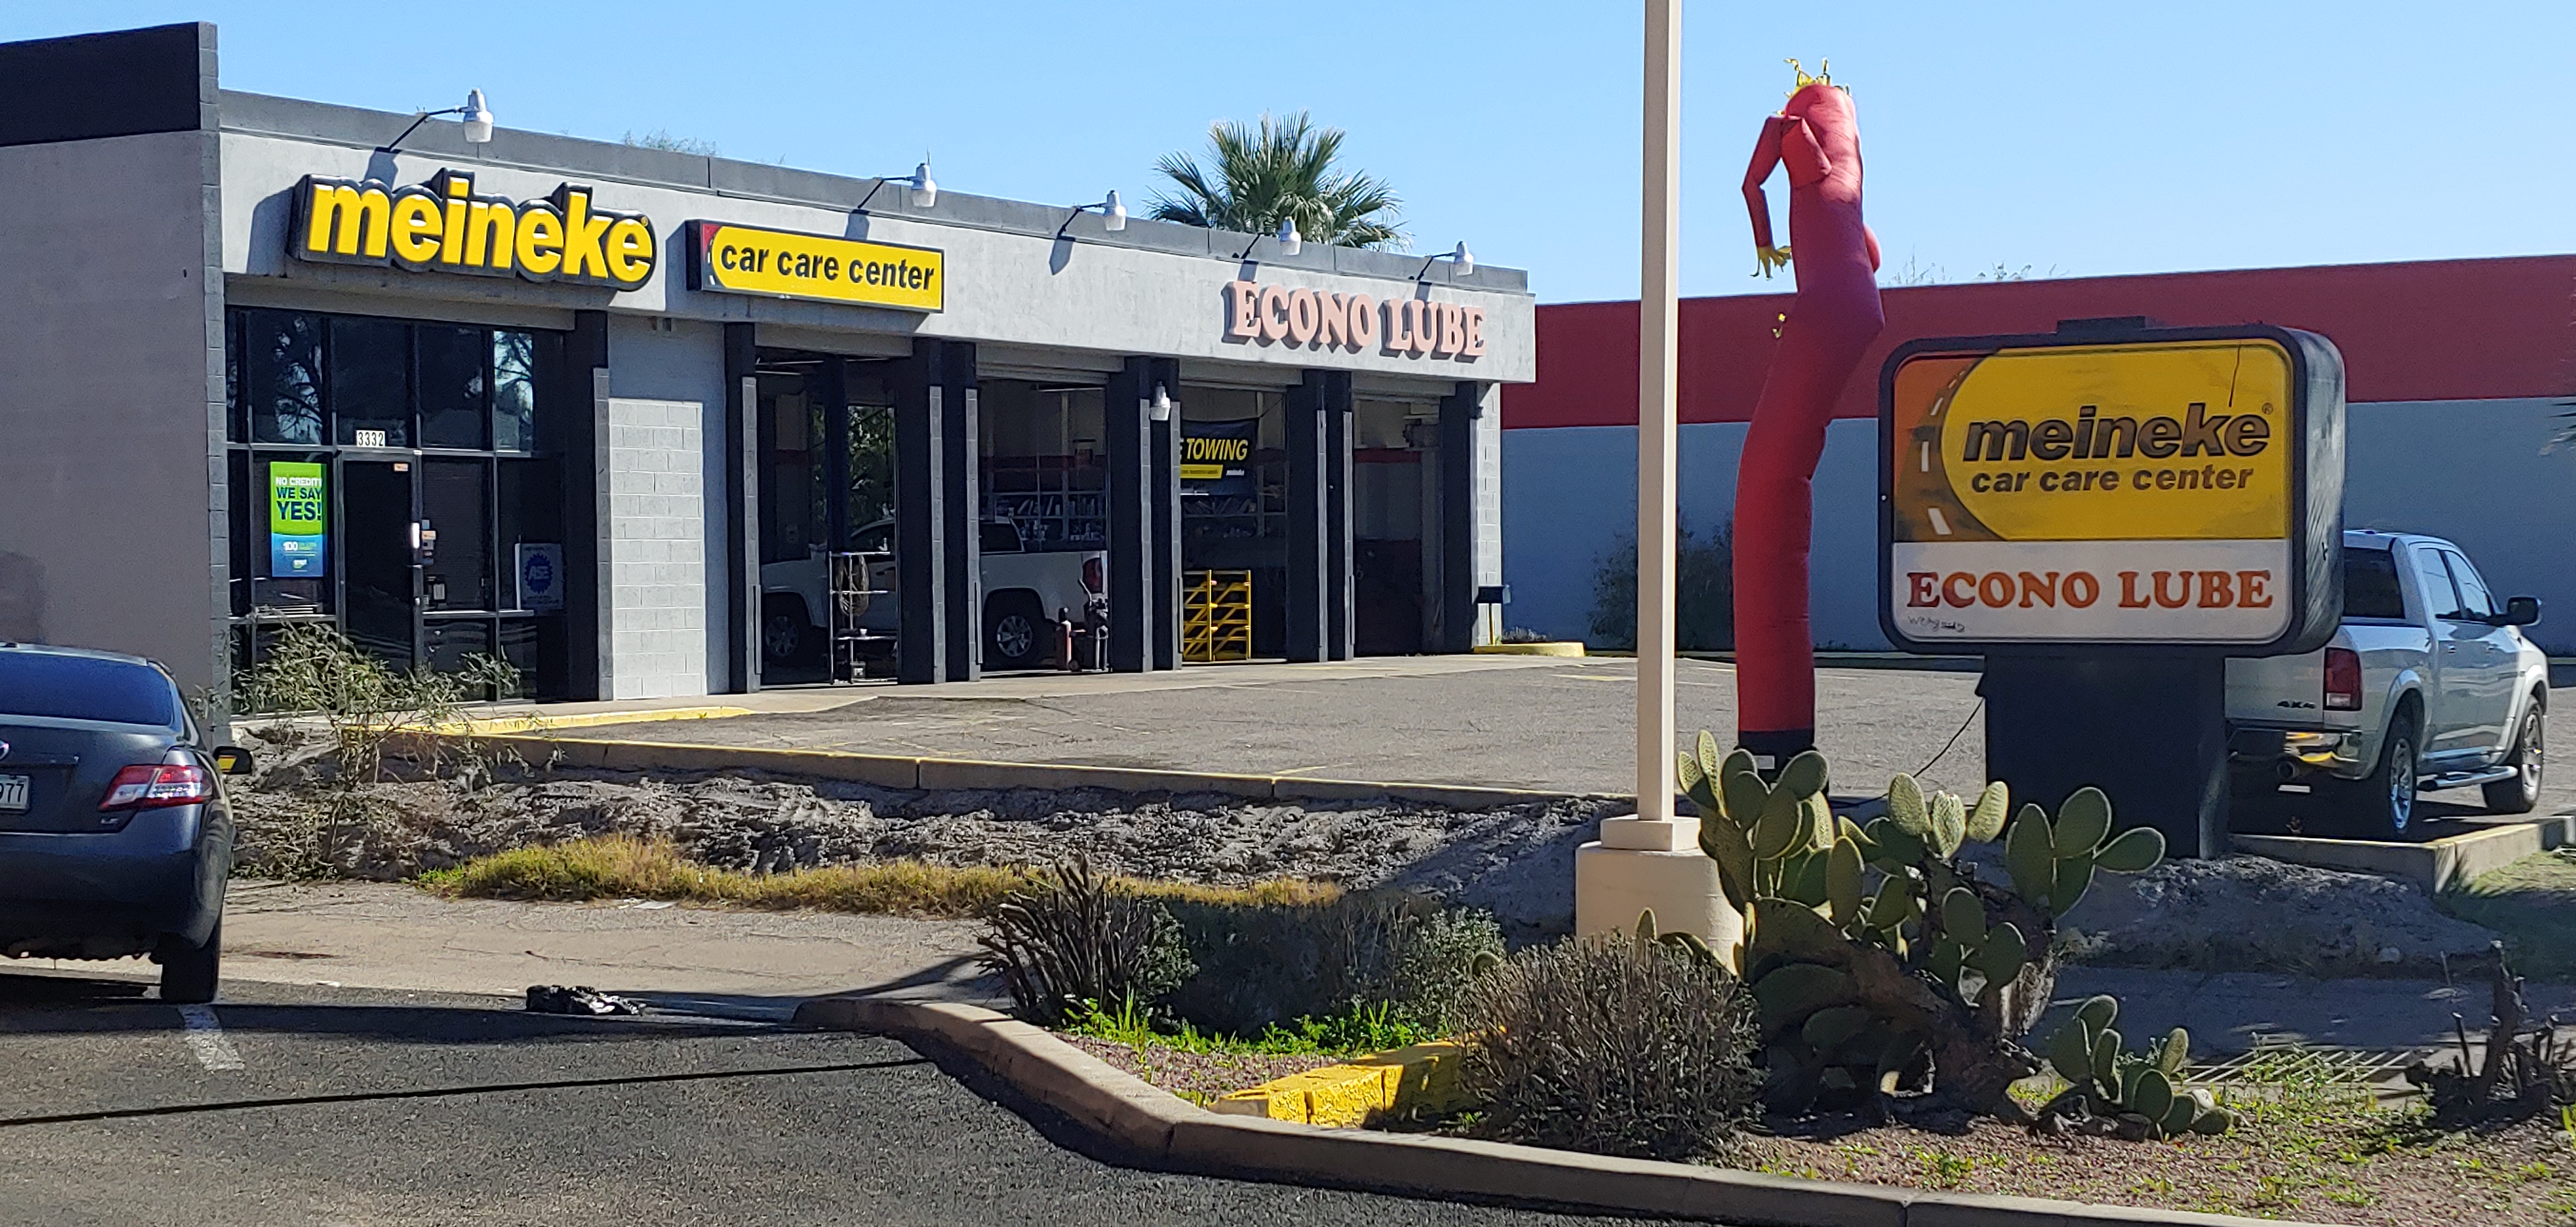 Meineke Car Care Center Coupons near me in Tucson, AZ ...